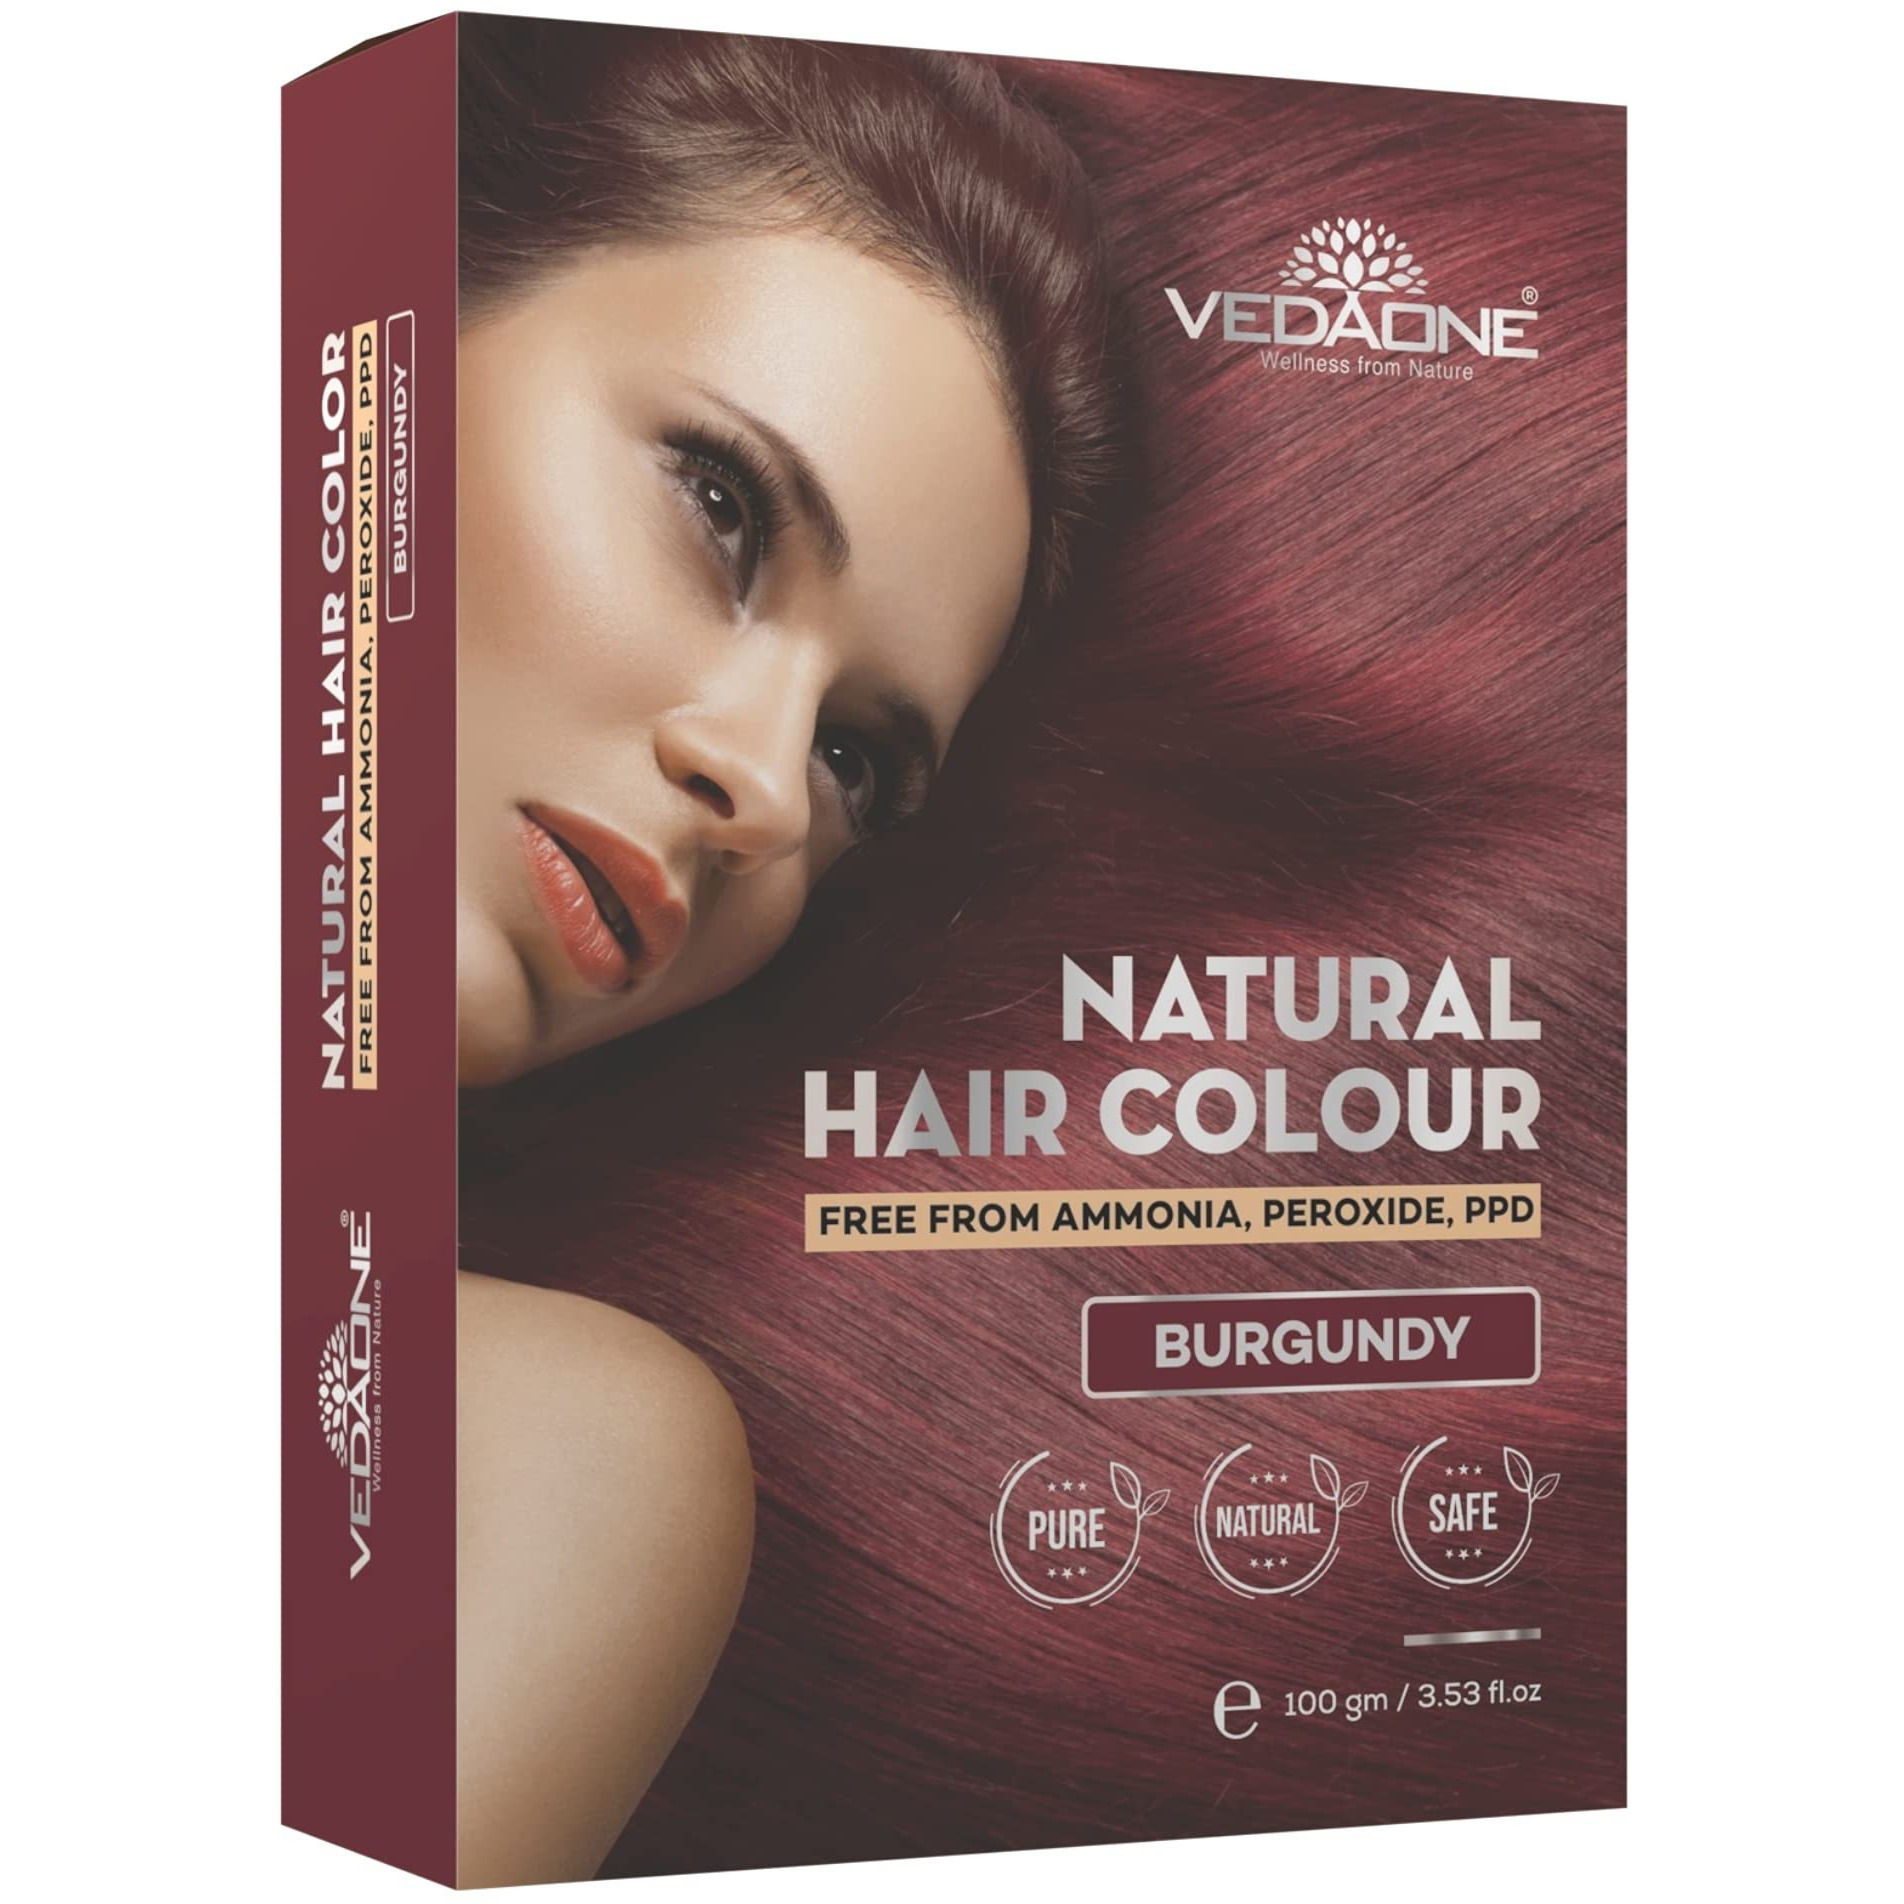 Revlon Colorsilk Hair Color 34 Deep Burgundy - Urban Beauty